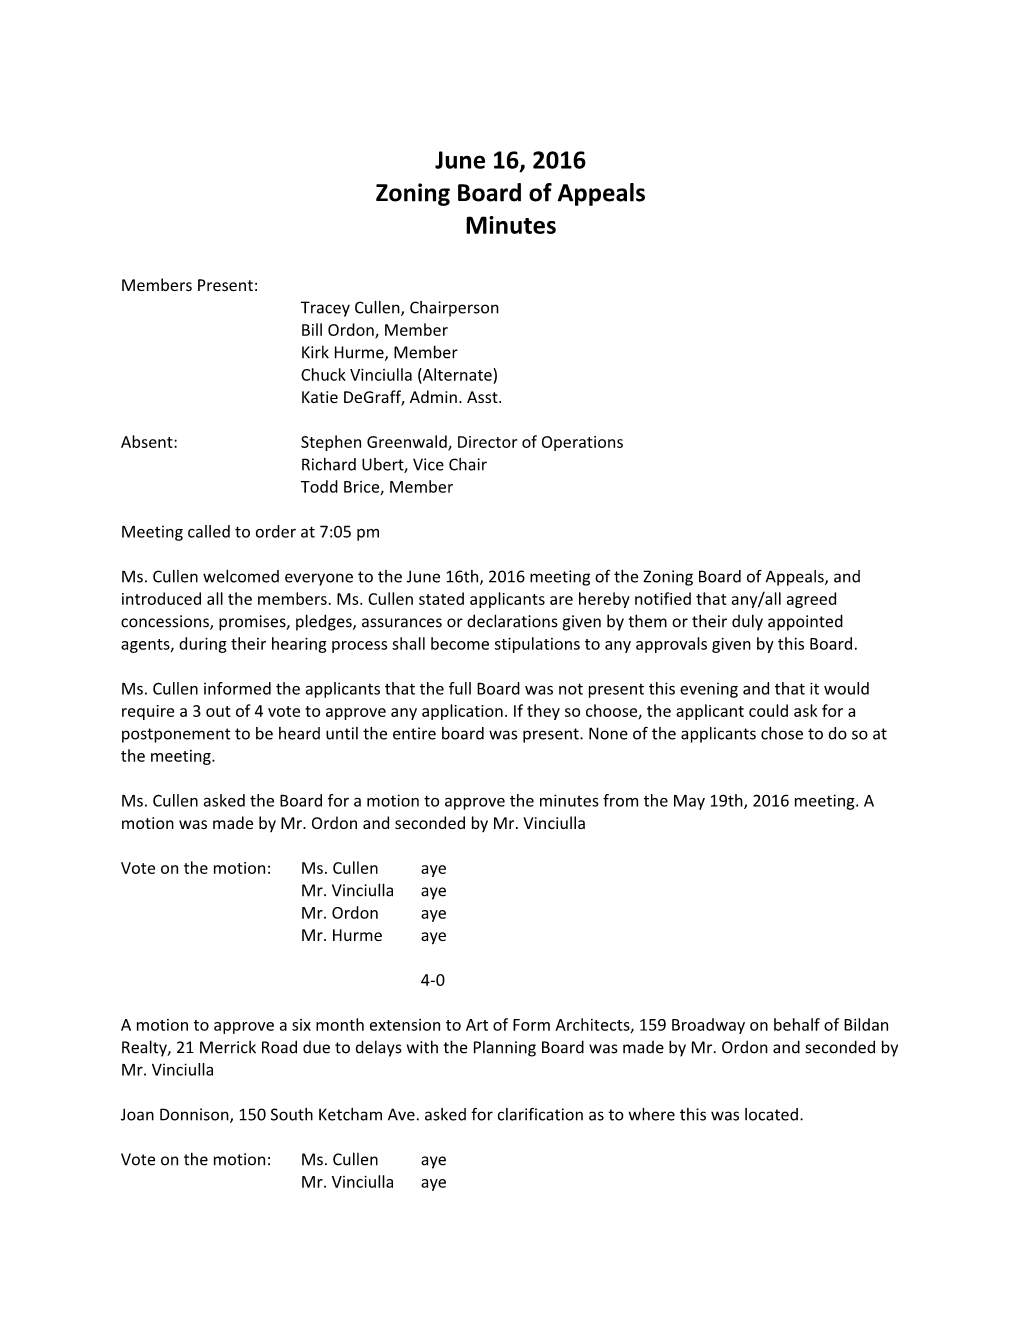 Zoning Board of Appeals s6